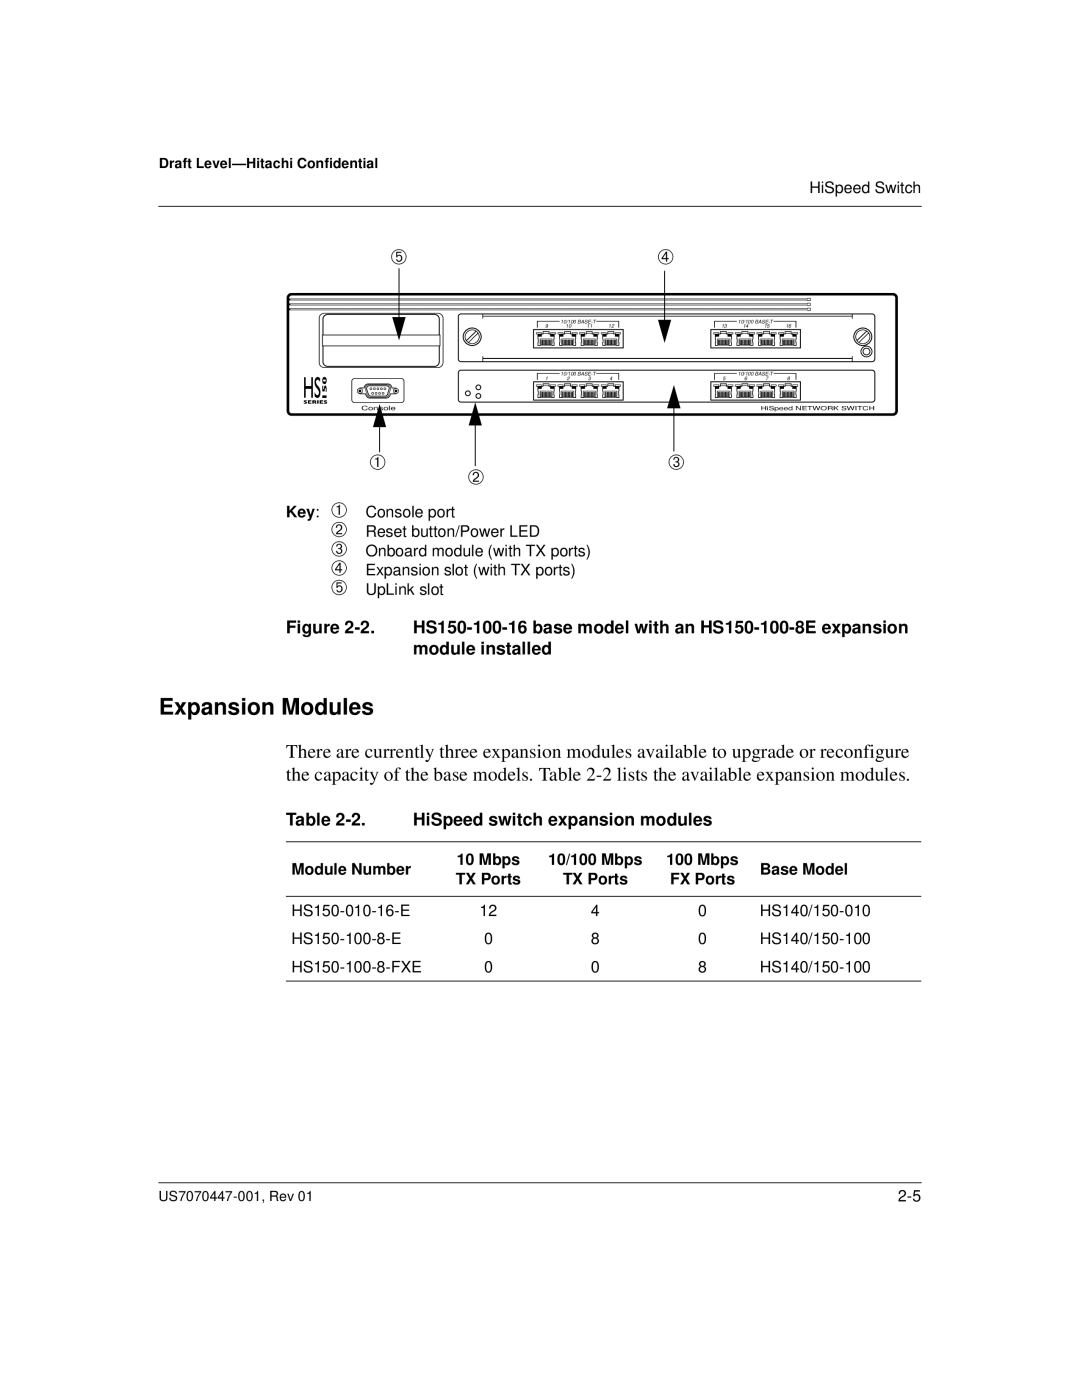 Hitachi US7070447-001 manual Expansion Modules, HiSpeed switch expansion modules 